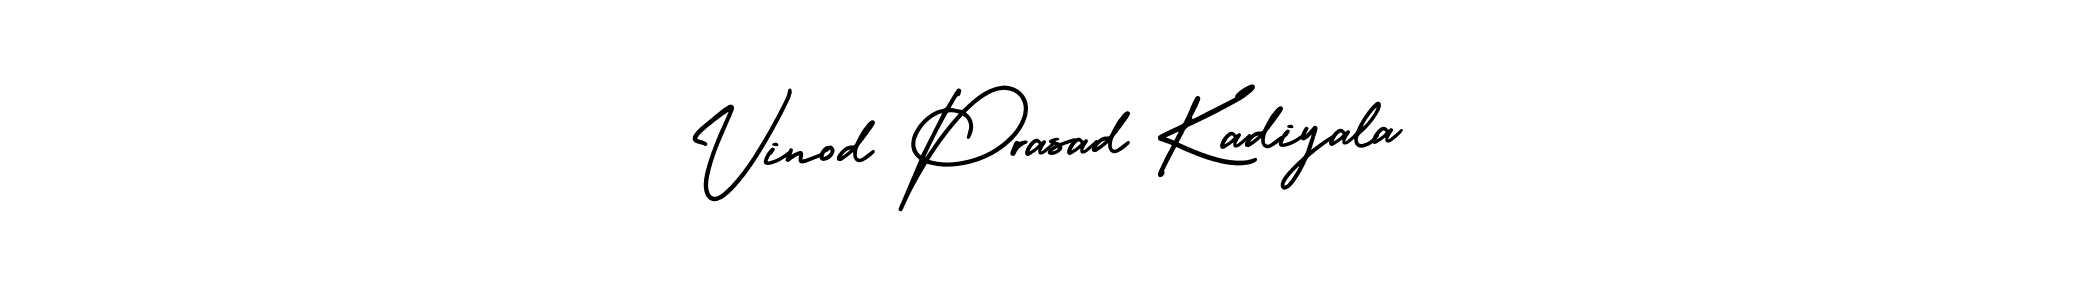 Make a beautiful signature design for name Vinod Prasad Kadiyala. Use this online signature maker to create a handwritten signature for free. Vinod Prasad Kadiyala signature style 3 images and pictures png